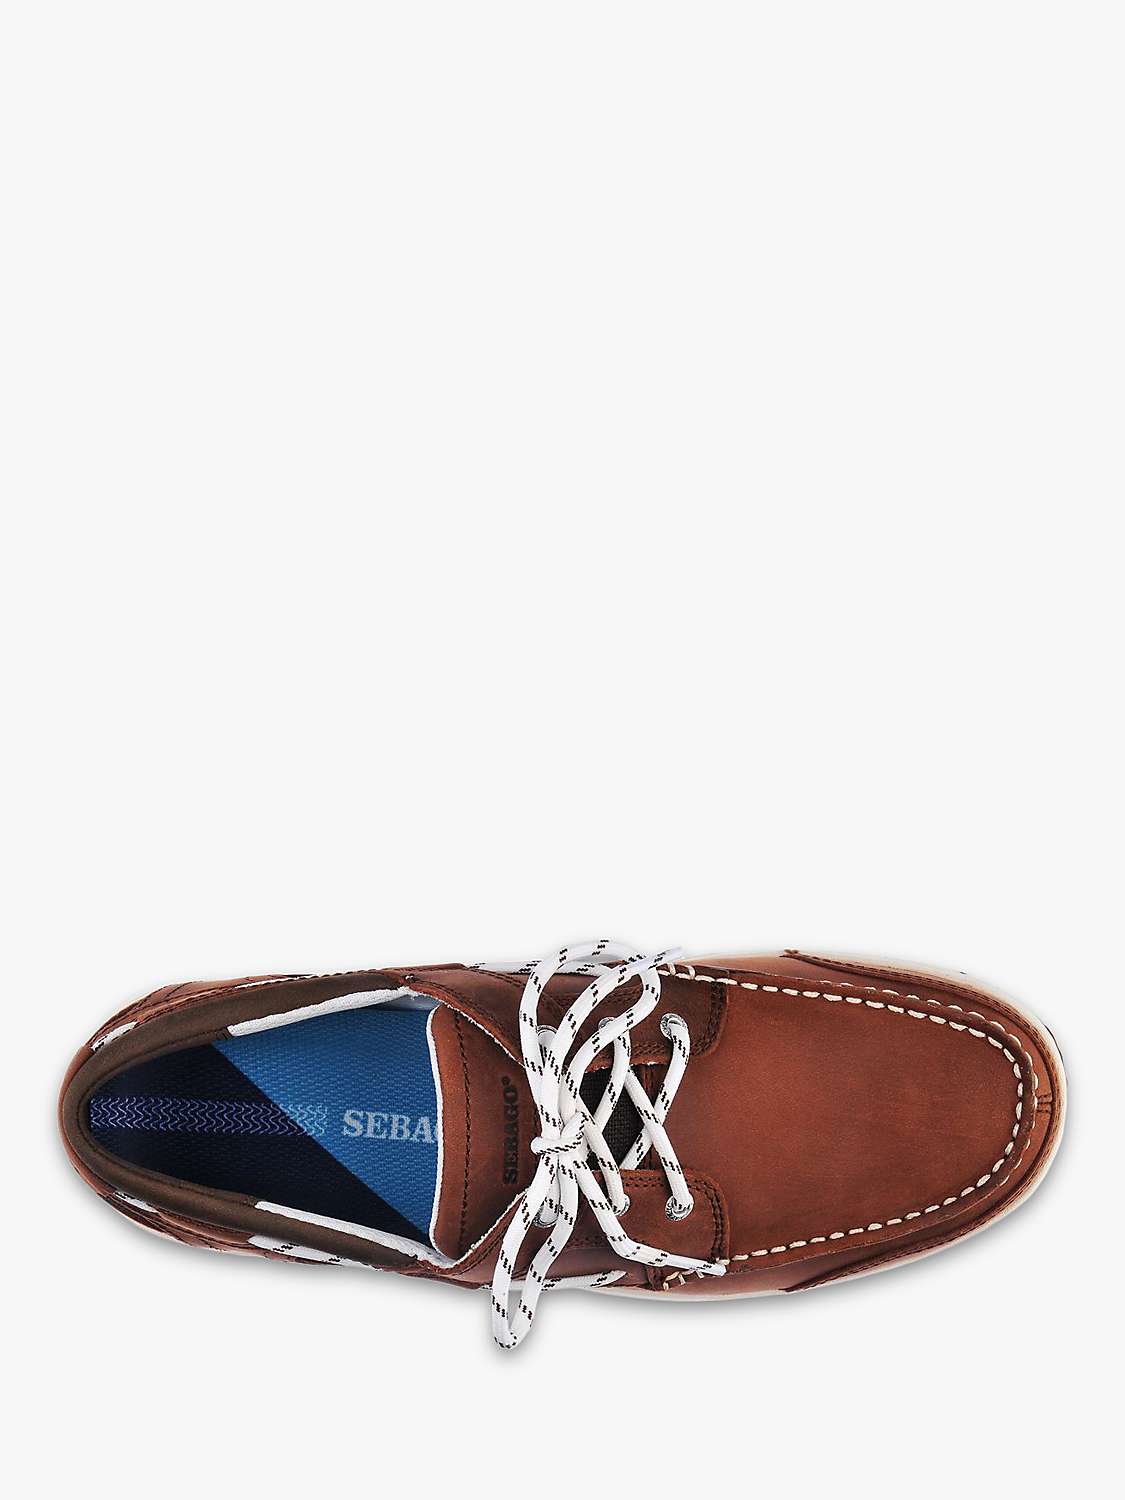 Buy Sebago Triton Leather Boat Shoes Online at johnlewis.com